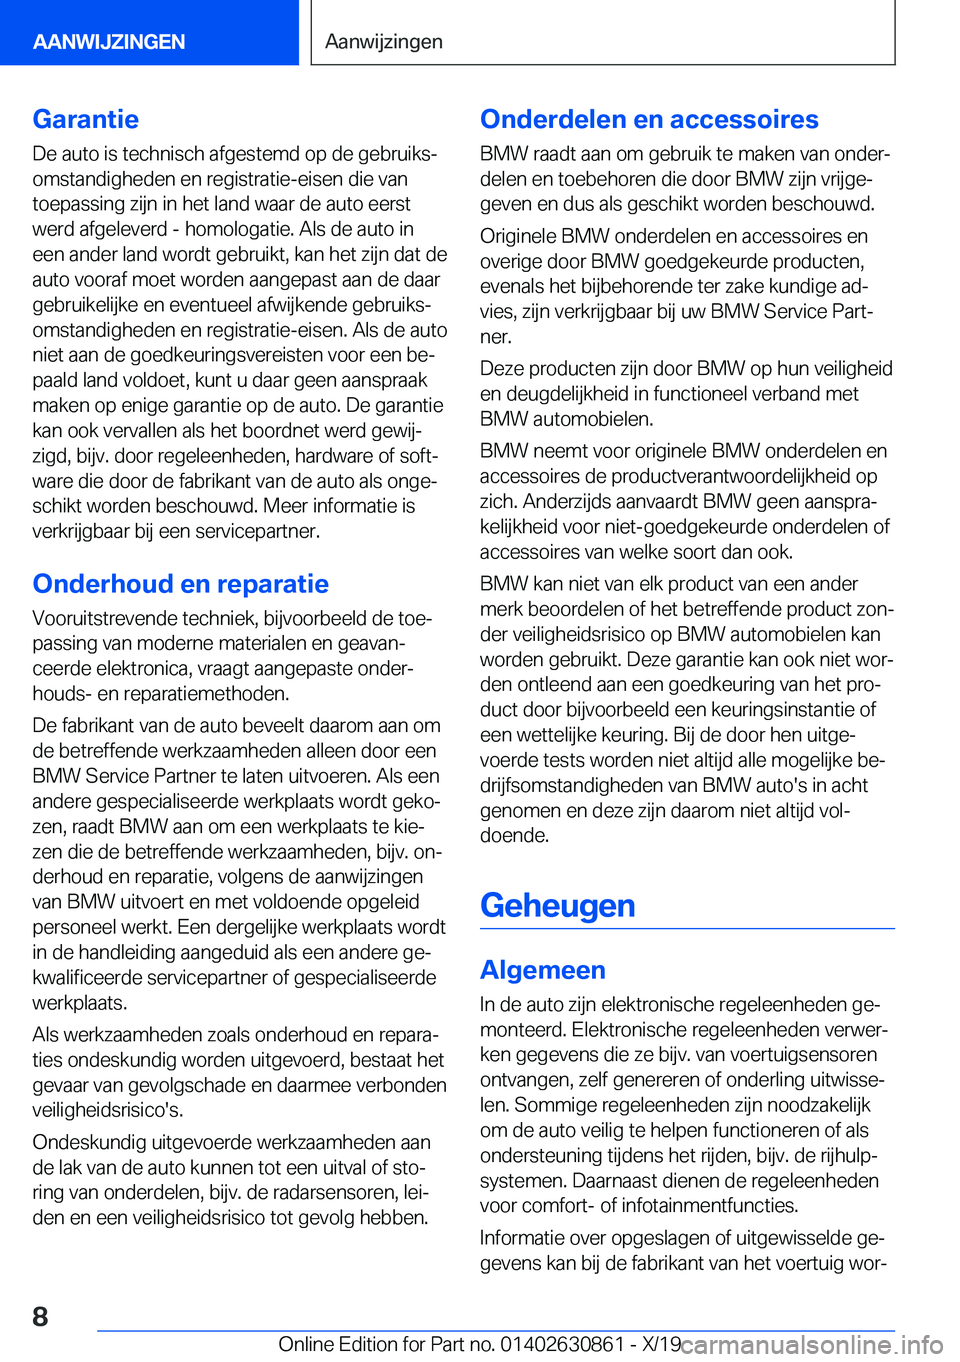 BMW 4 SERIES GRAN COUPE 2020  Instructieboekjes (in Dutch) �G�a�r�a�n�t�i�e�D�e��a�u�t�o��i�s��t�e�c�h�n�i�s�c�h��a�f�g�e�s�t�e�m�d��o�p��d�e��g�e�b�r�u�i�k�sj
�o�m�s�t�a�n�d�i�g�h�e�d�e�n��e�n��r�e�g�i�s�t�r�a�t�i�e�-�e�i�s�e�n��d�i�e��v�a�n �t�o